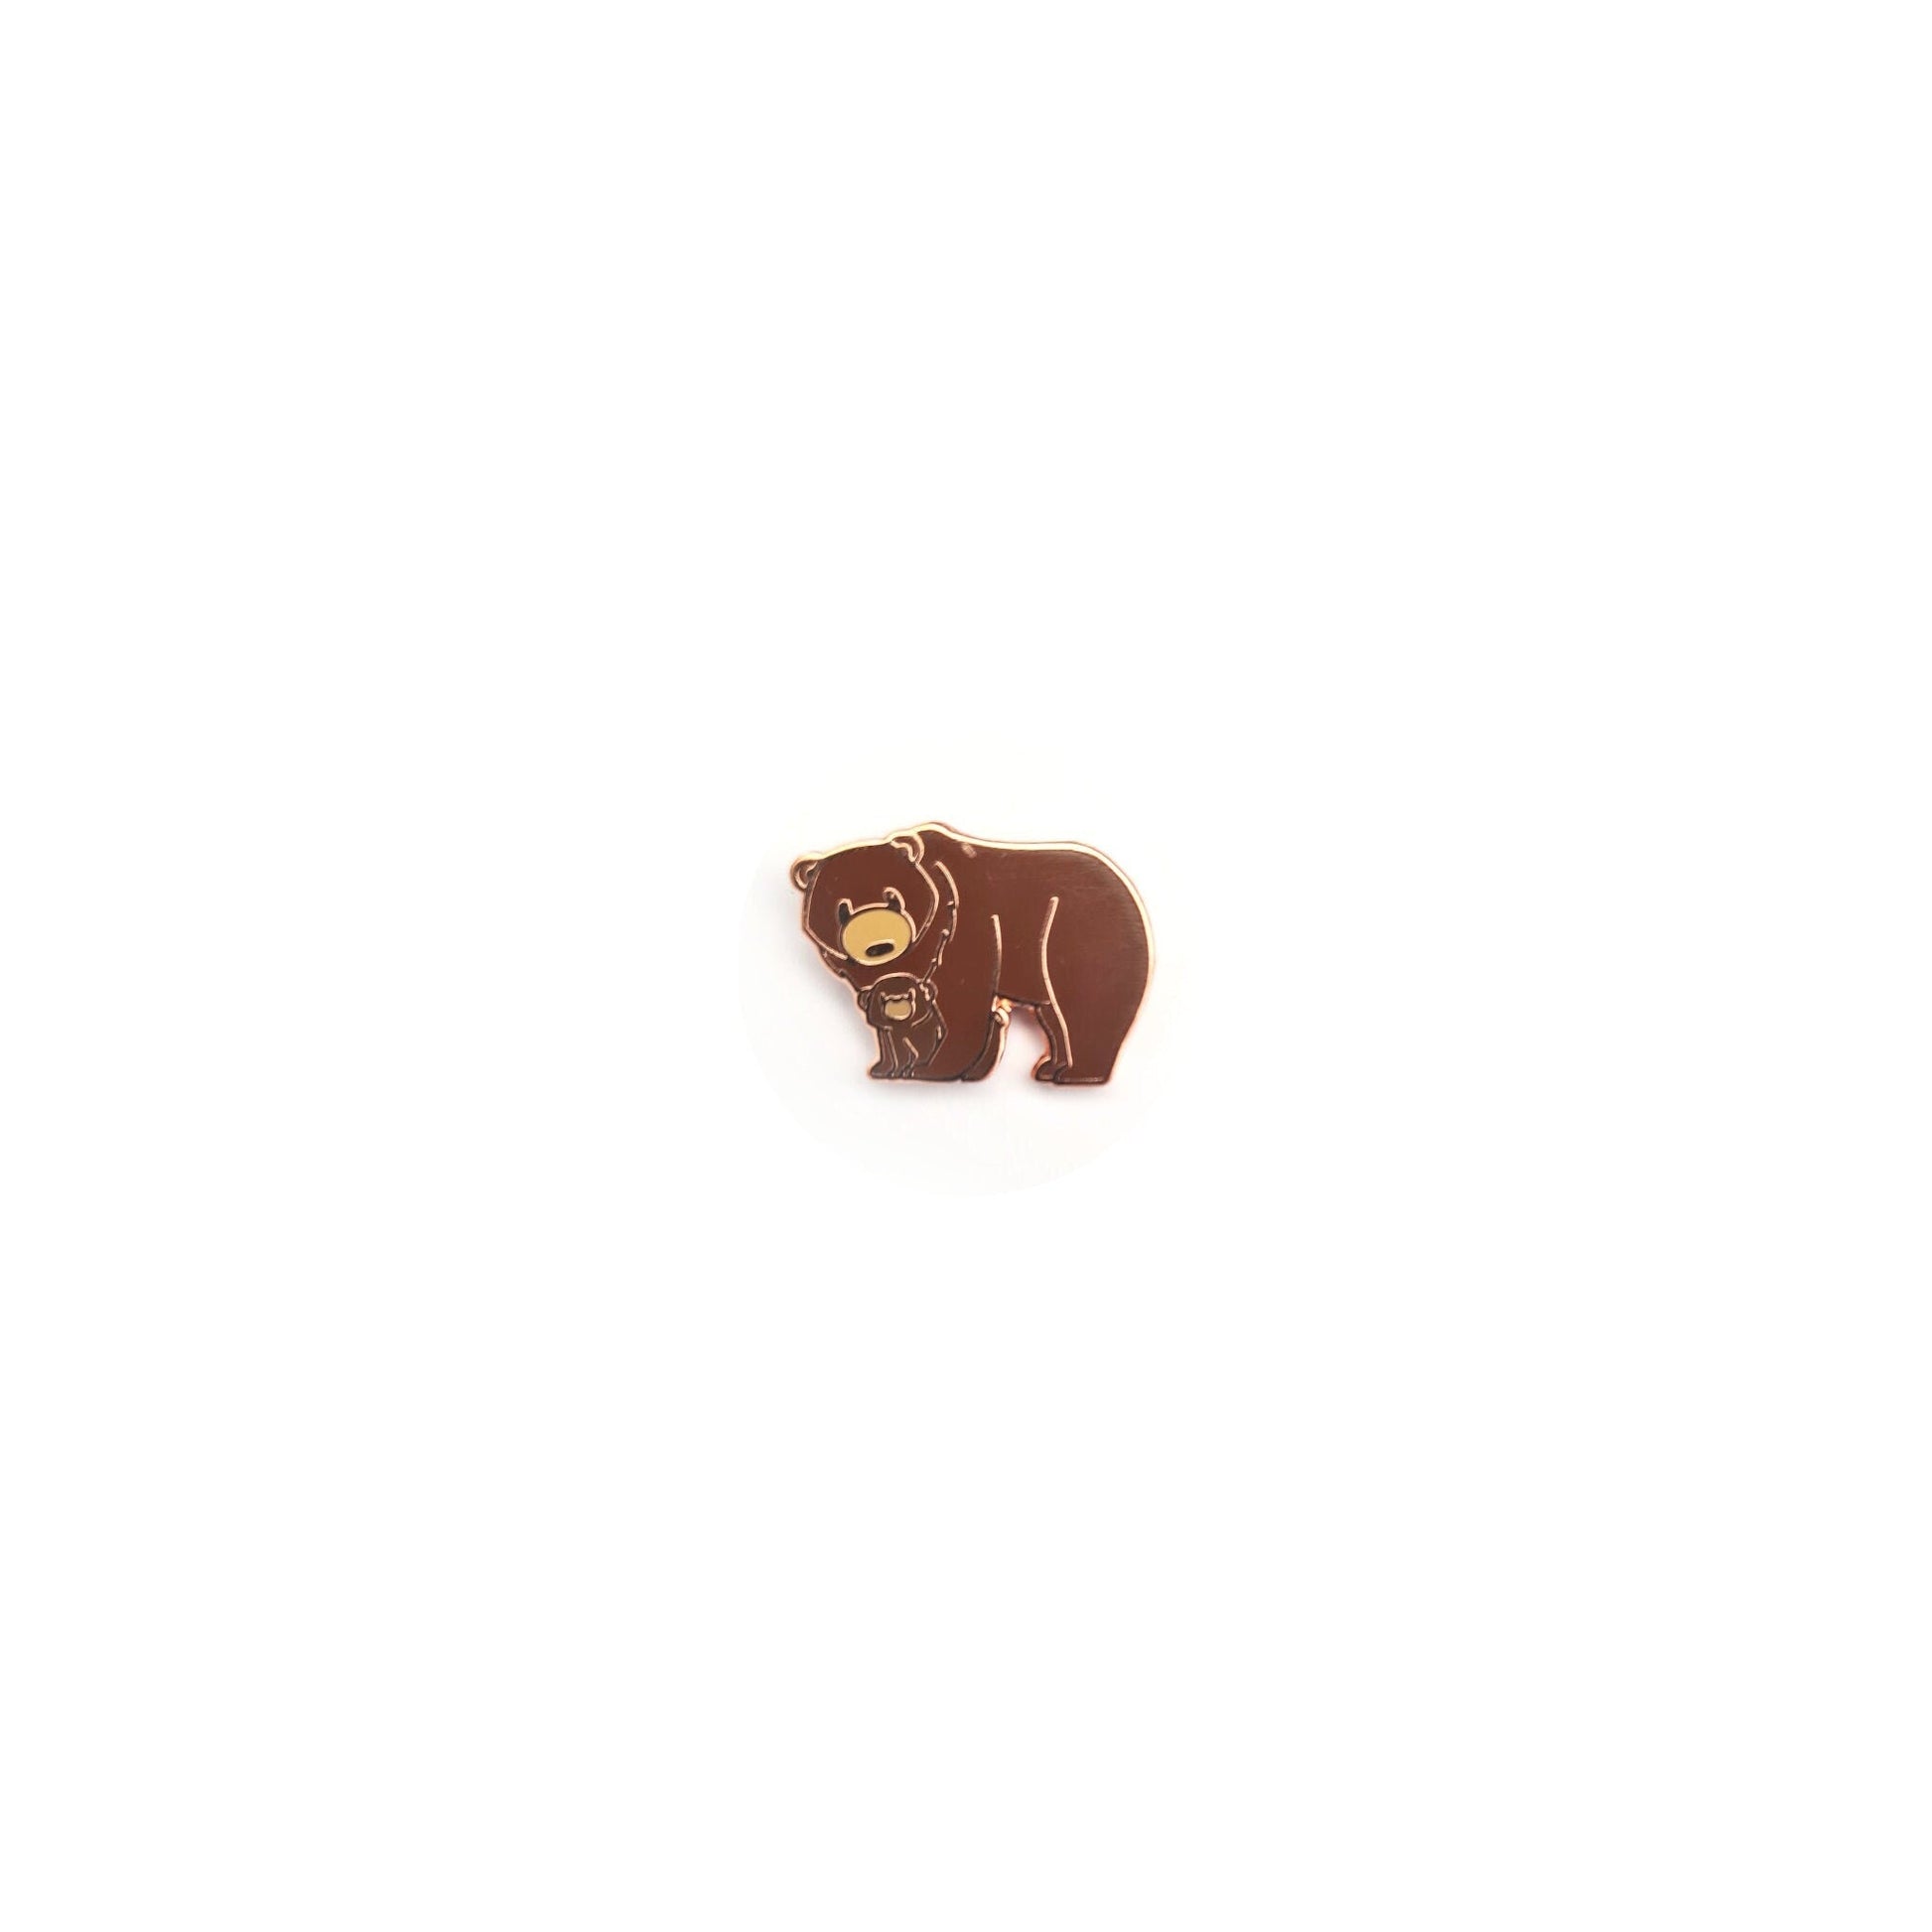 Mama Bear and Baby Bear - Small Enamel Pin, Mother’s Day Gift, Pins, Brooches & Lapel Pins